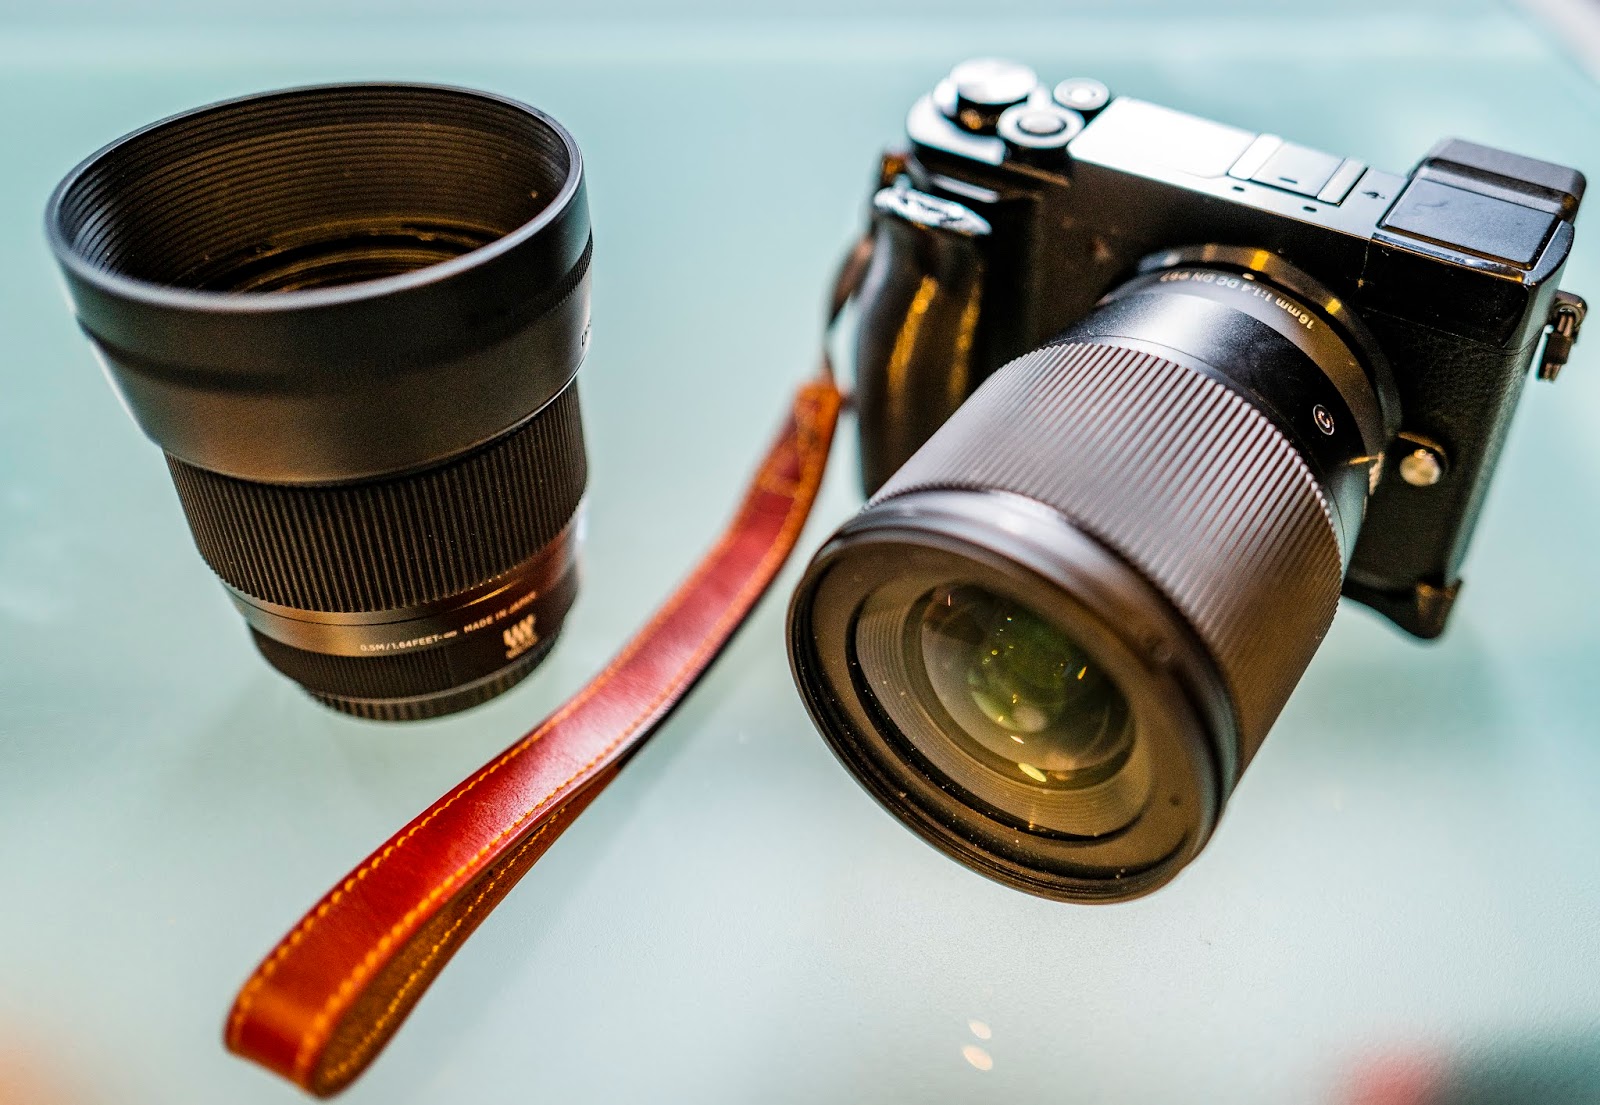 SOUNDIMAGEPLUS: Who full-frame? The Leica lookalike Panasonic GX9.